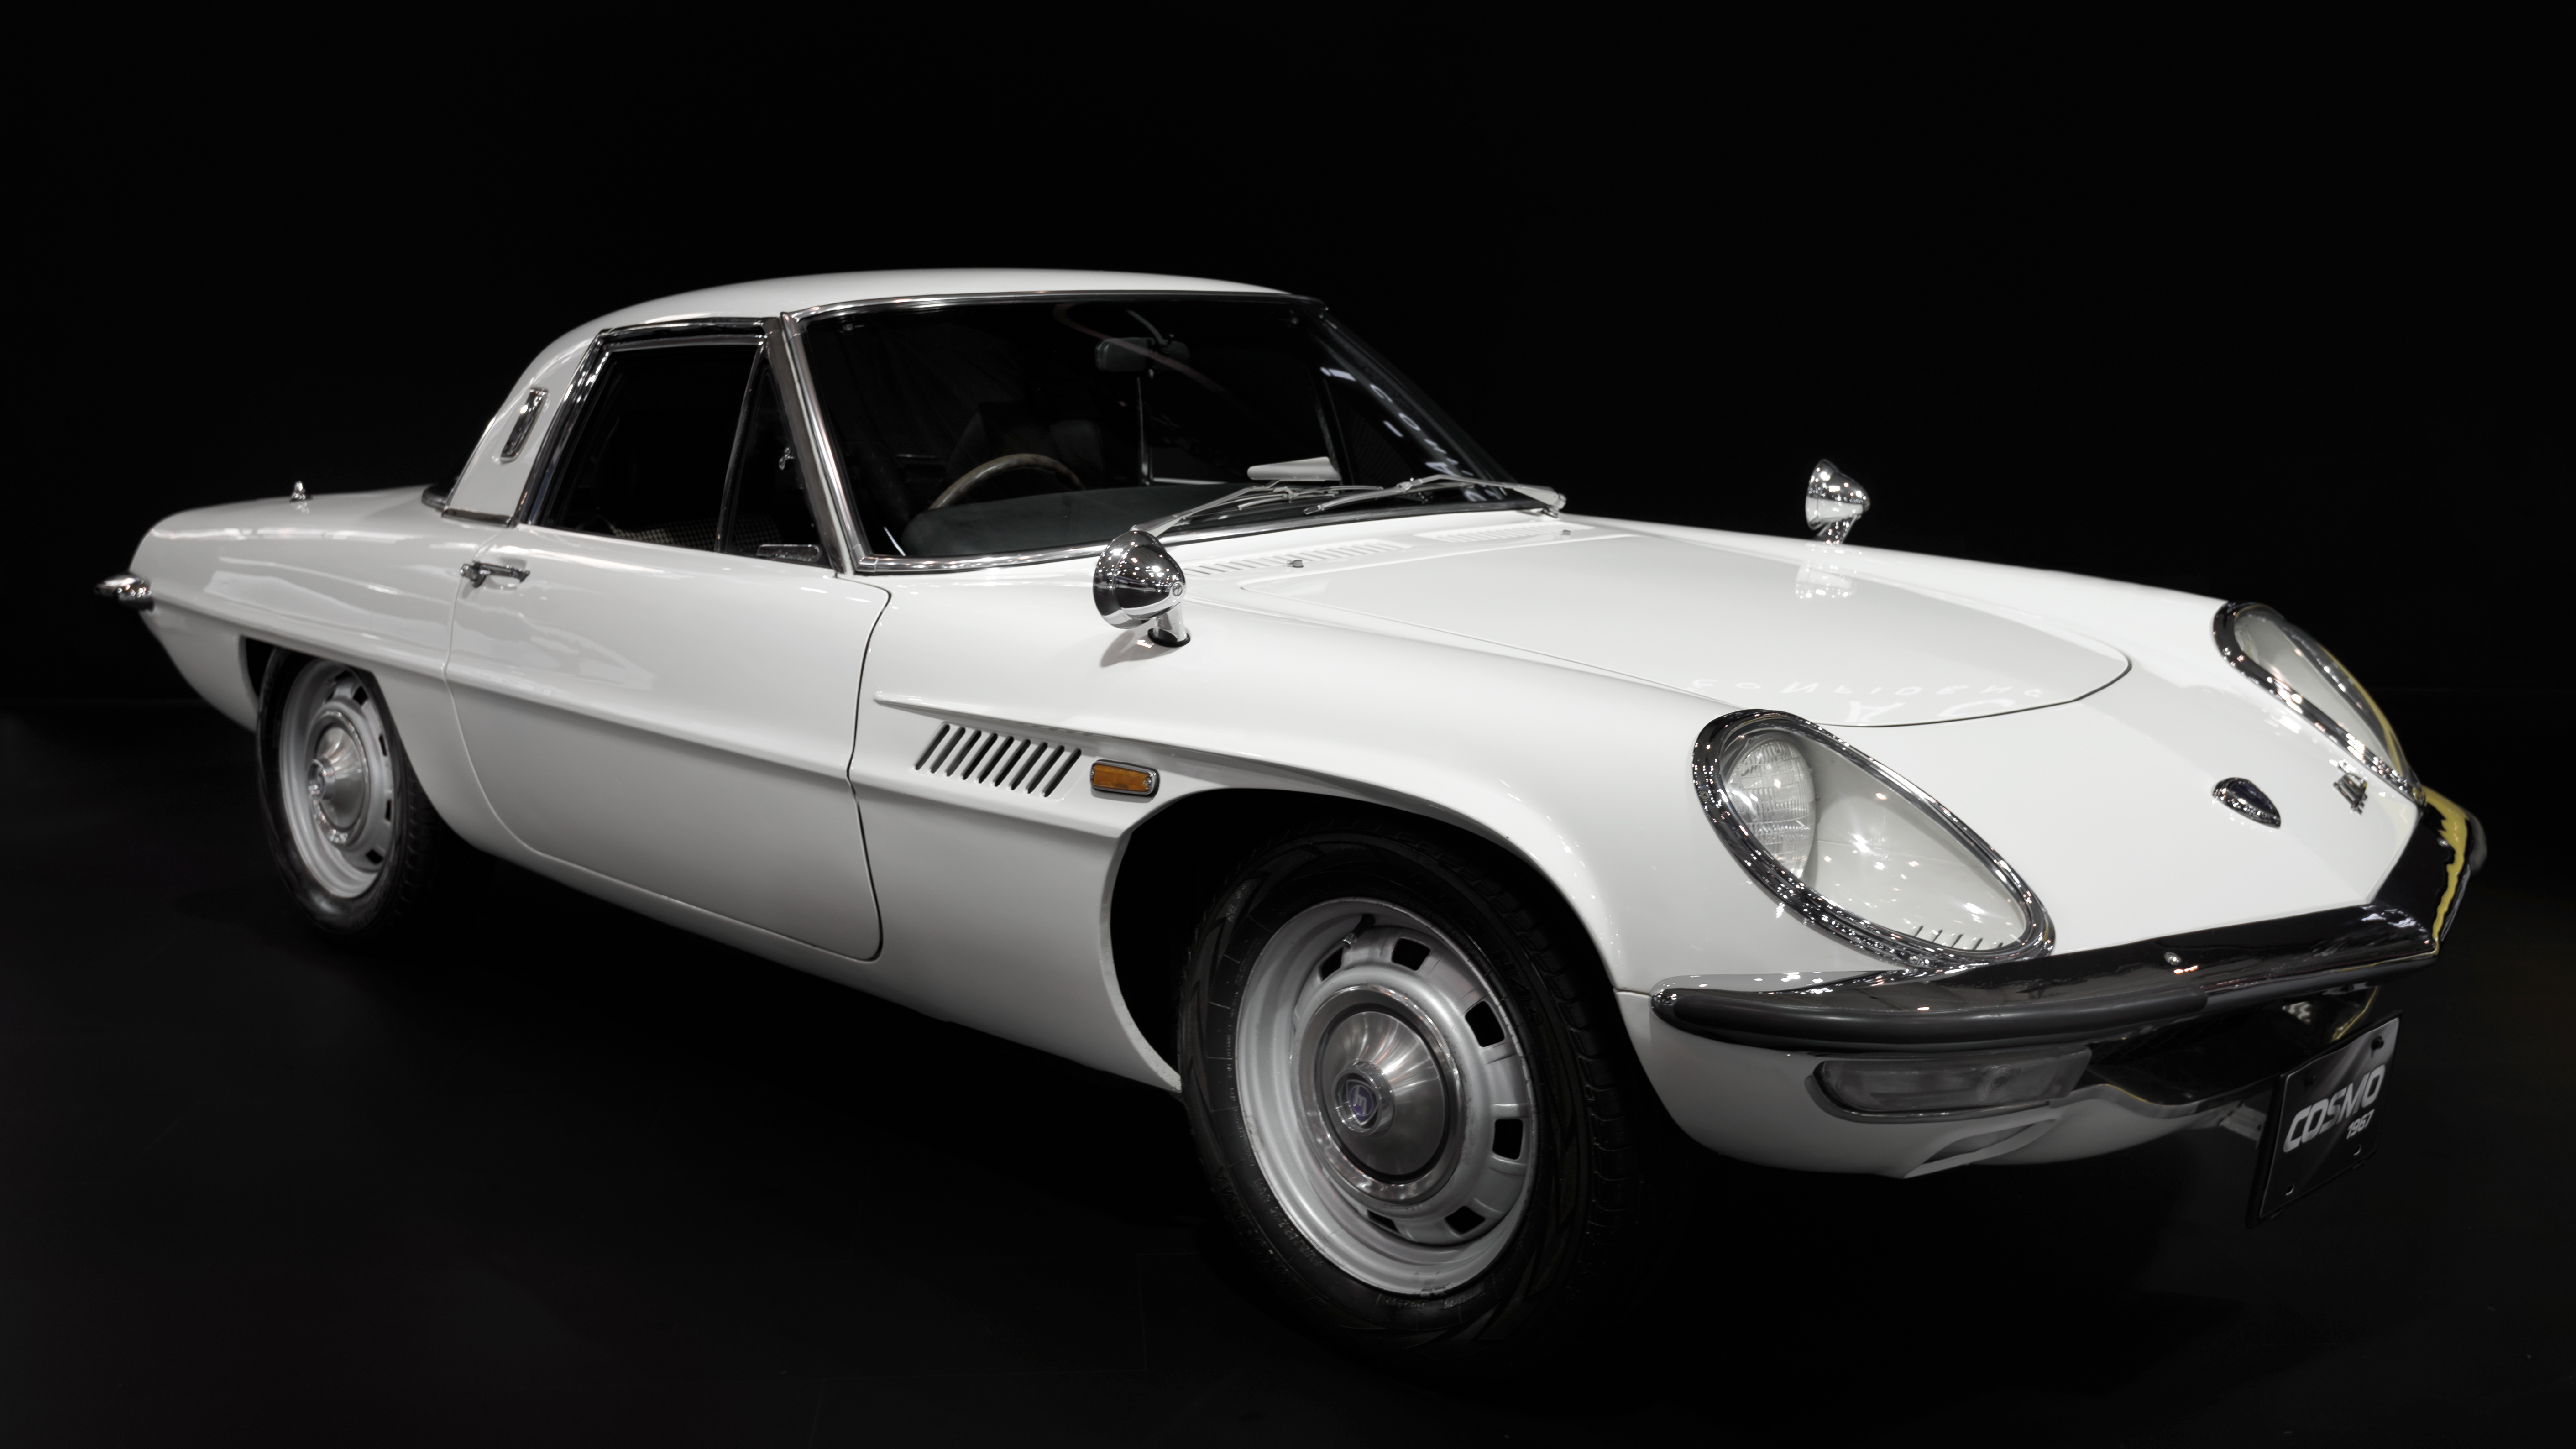 1967 Mazda Cosmo 110S, 2018, International, Toronto, Show, HQ Photo